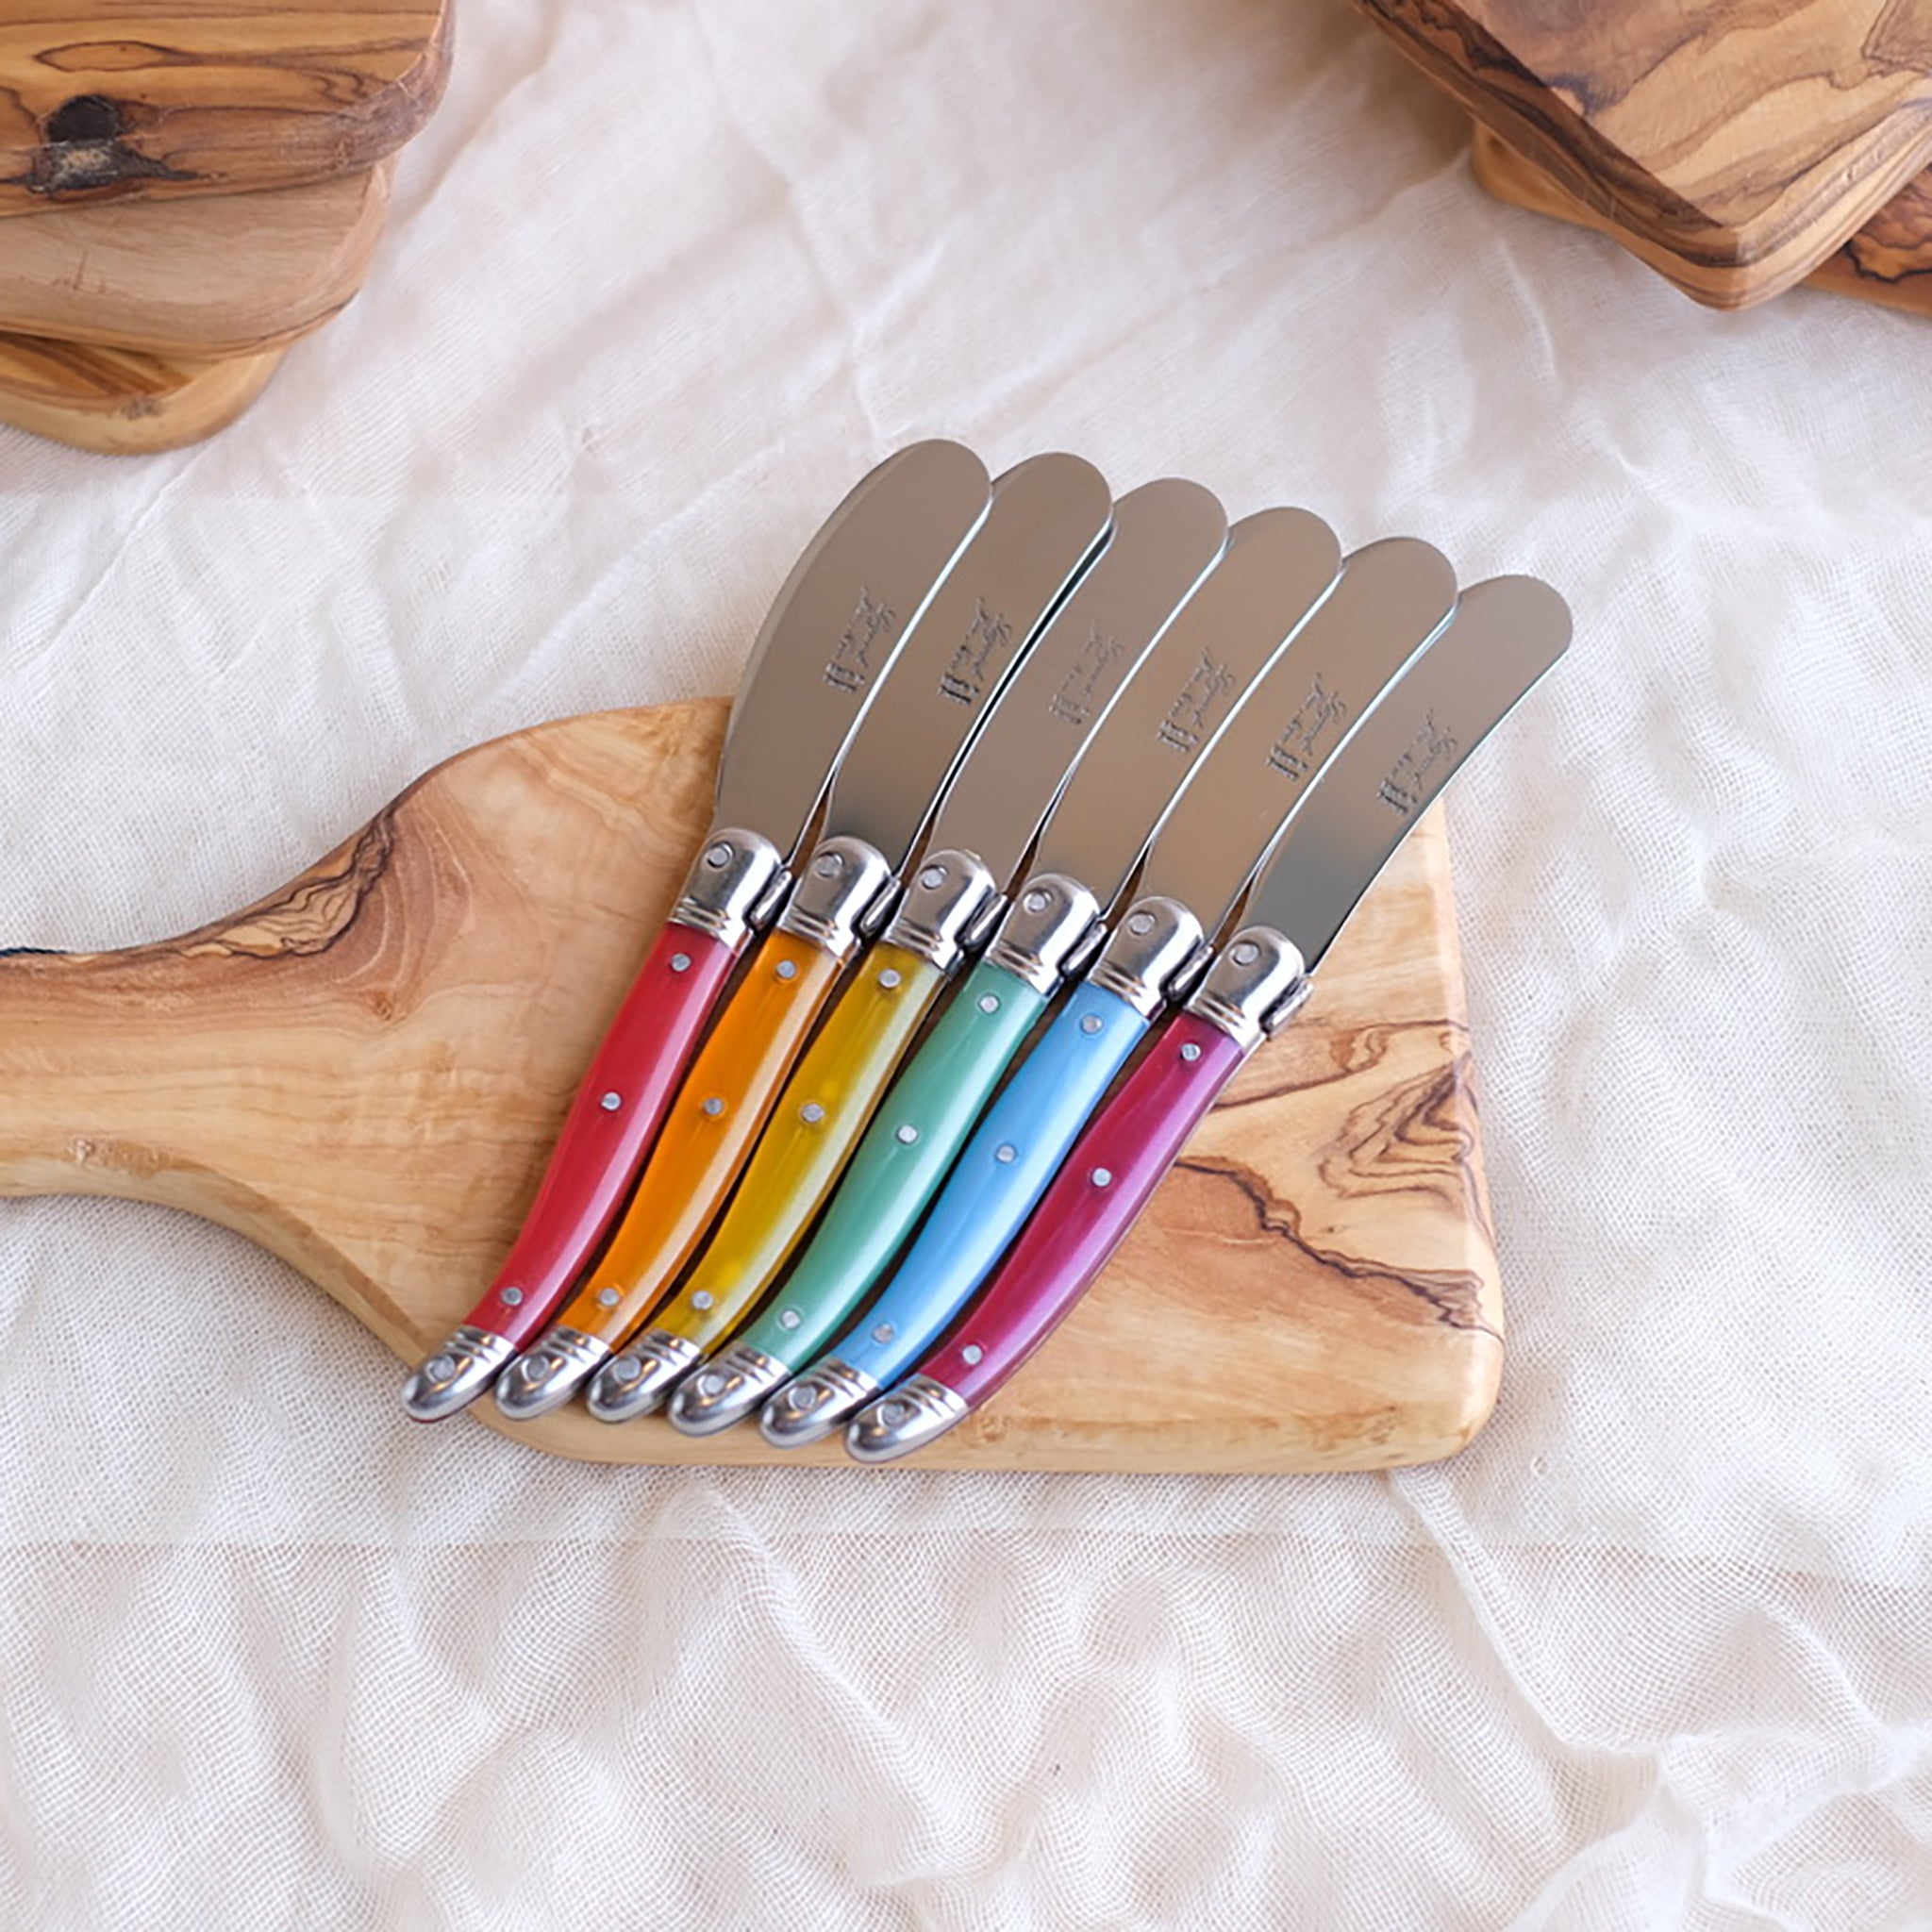 Laguiole Rainbow Mini Cheese Knives